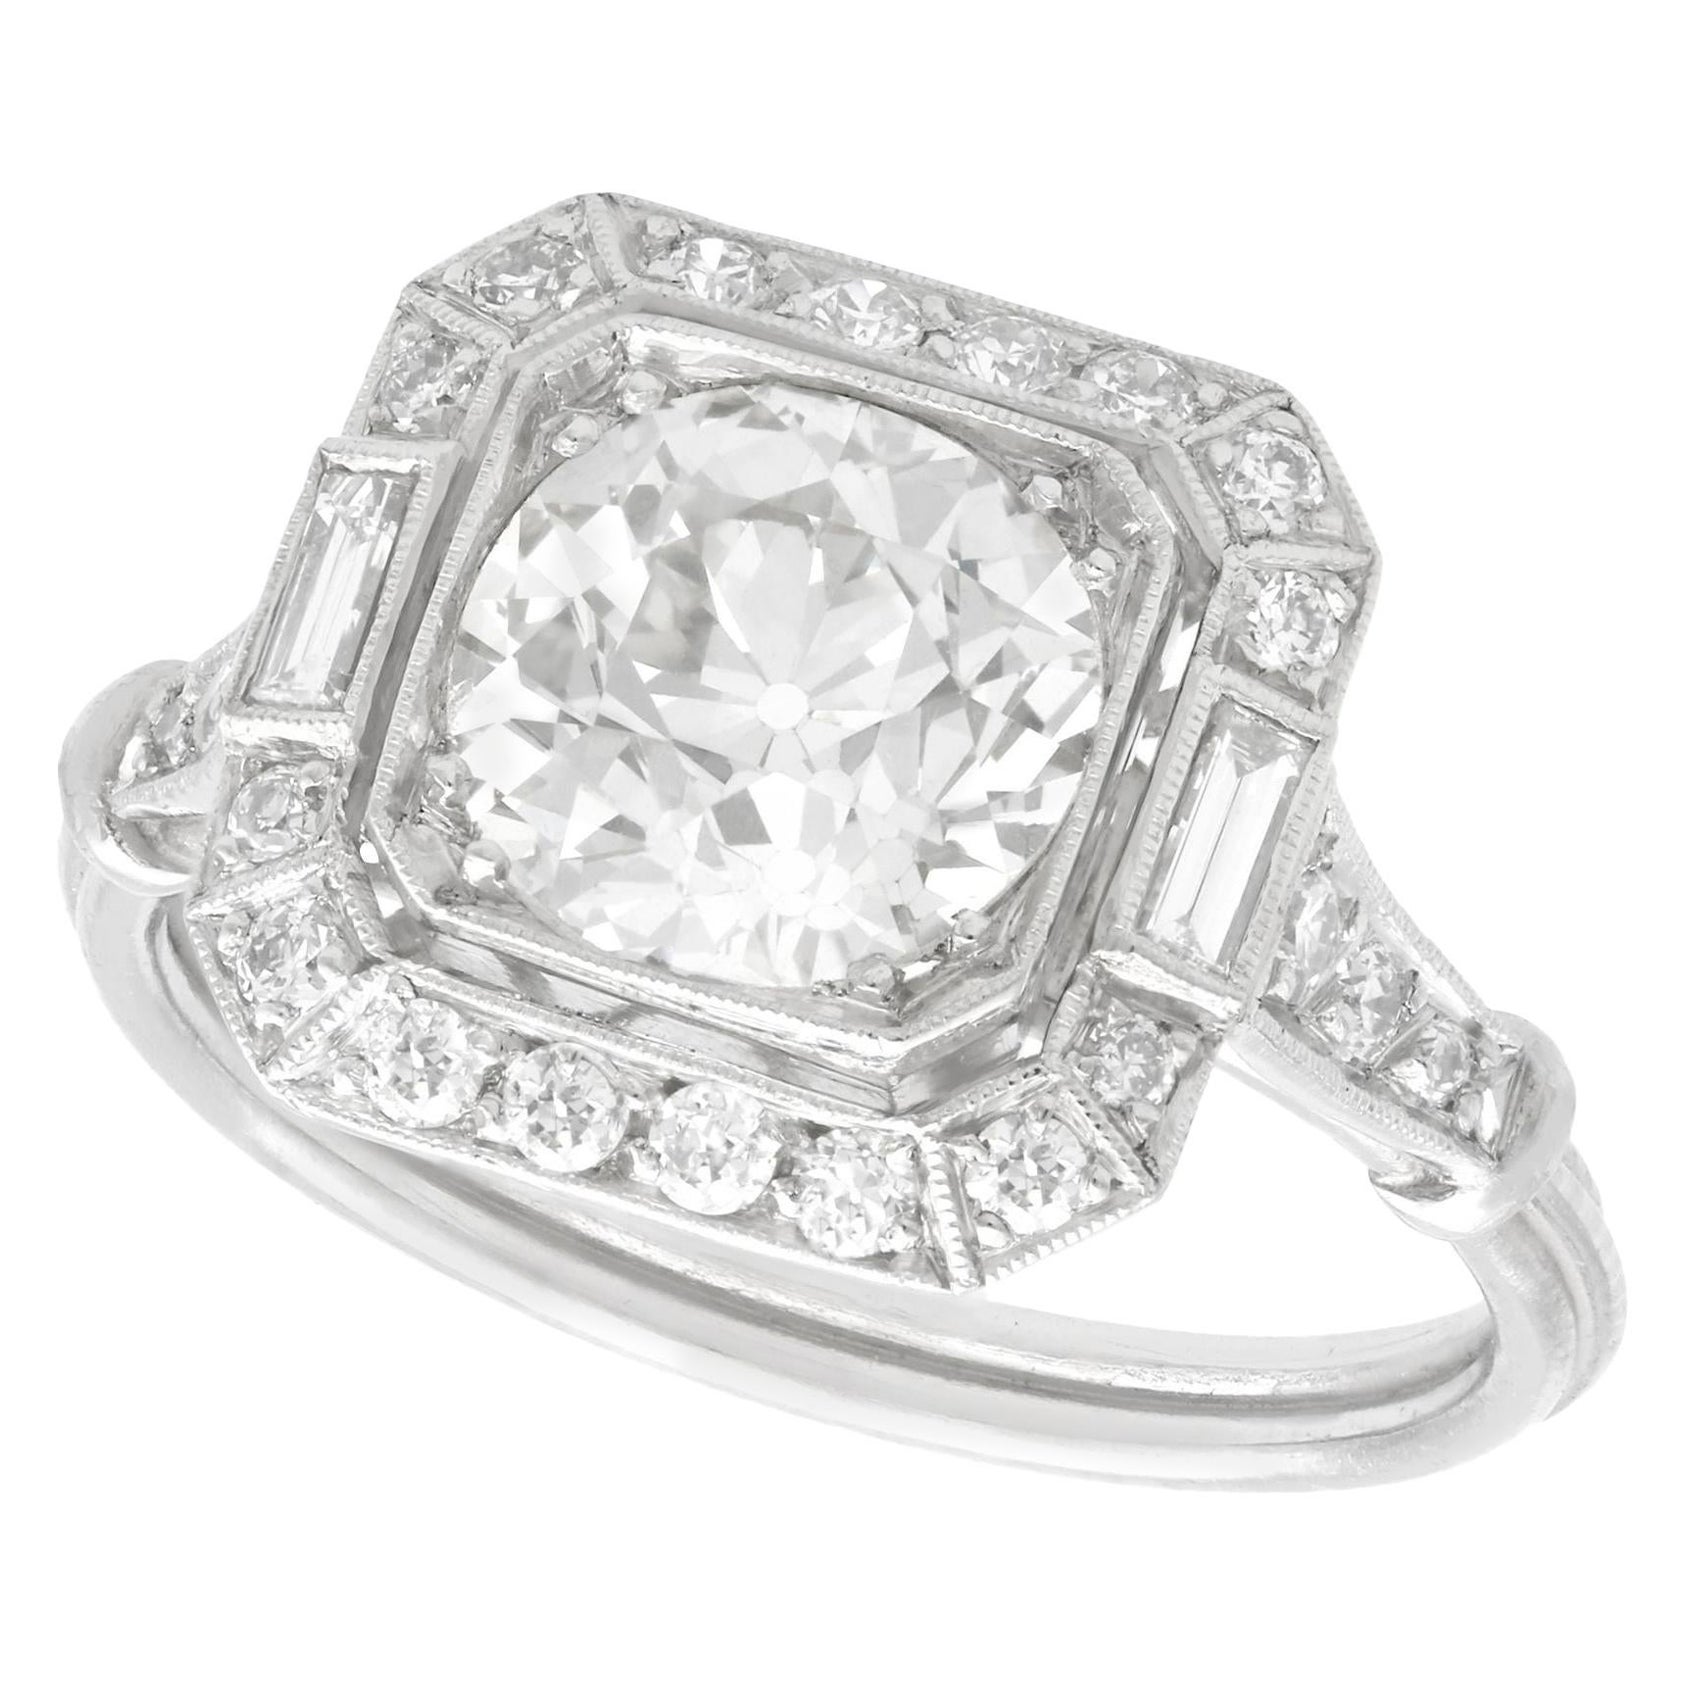 Art Deco Style 2.89 Carat Diamond and Platinum Engagement Ring